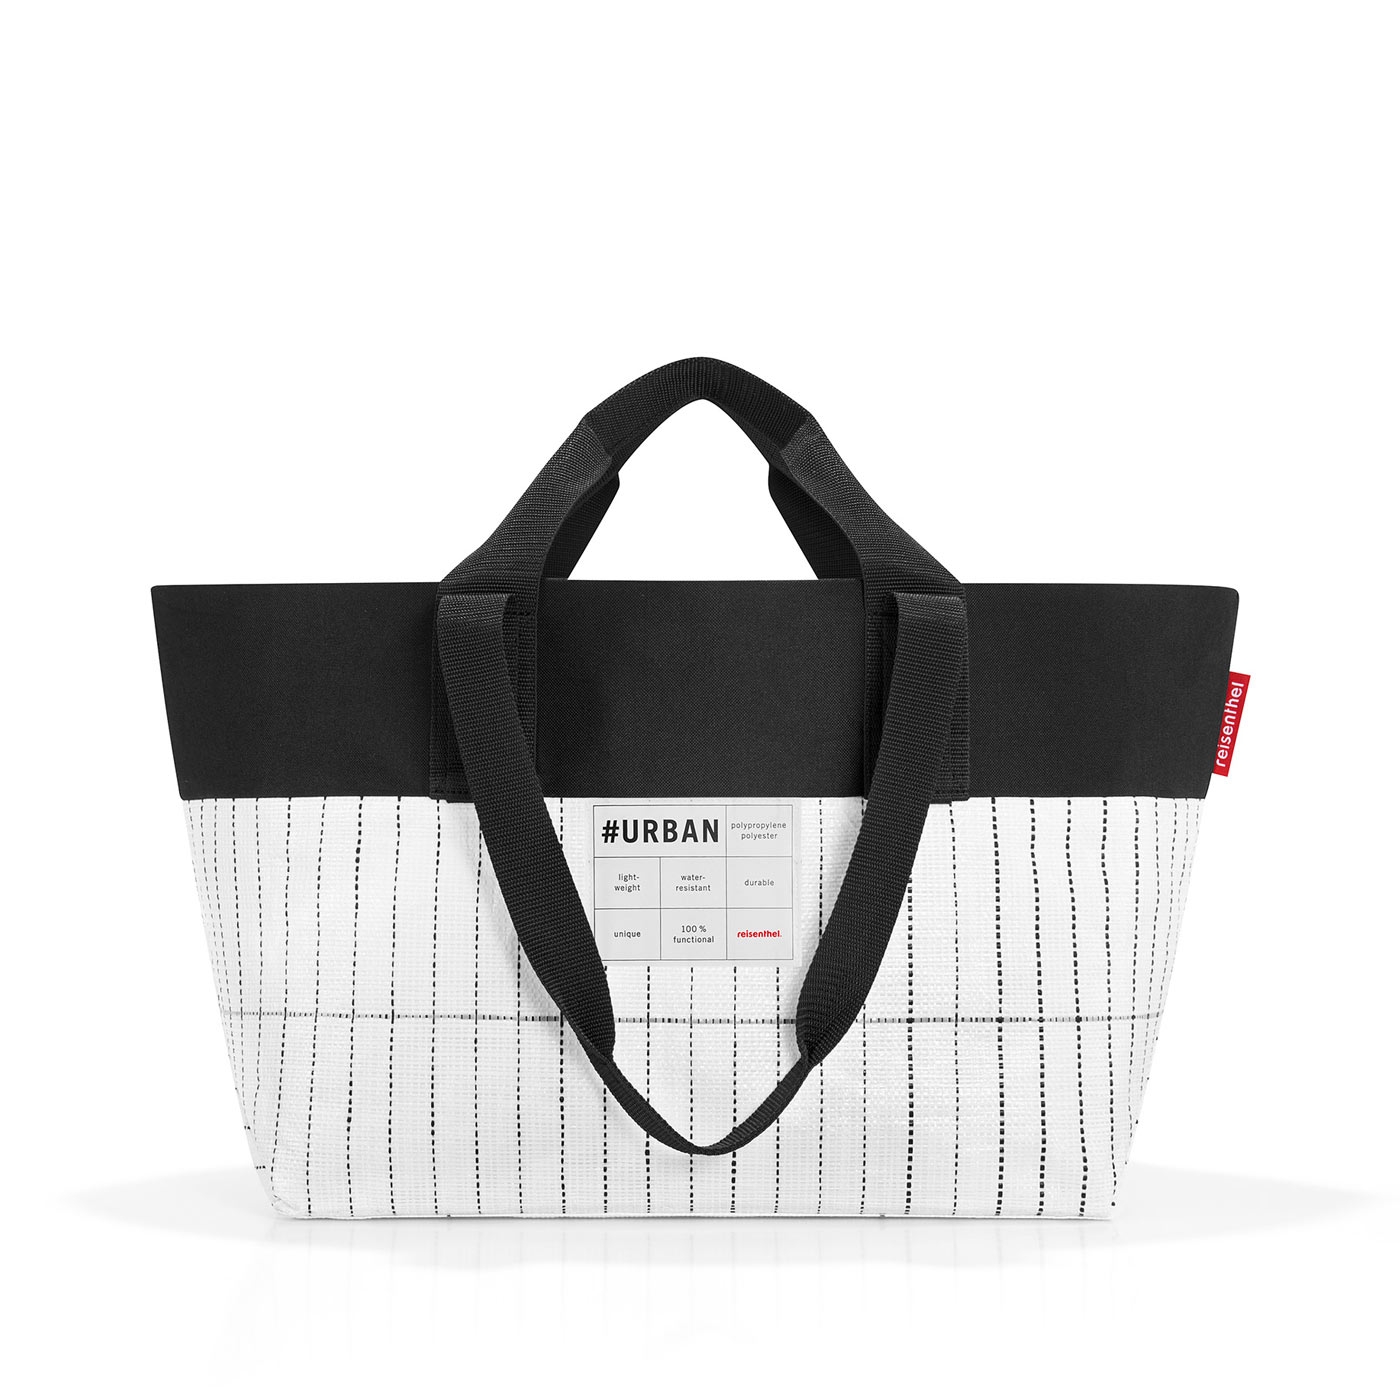 Urban bag new york  black & white reisenthel